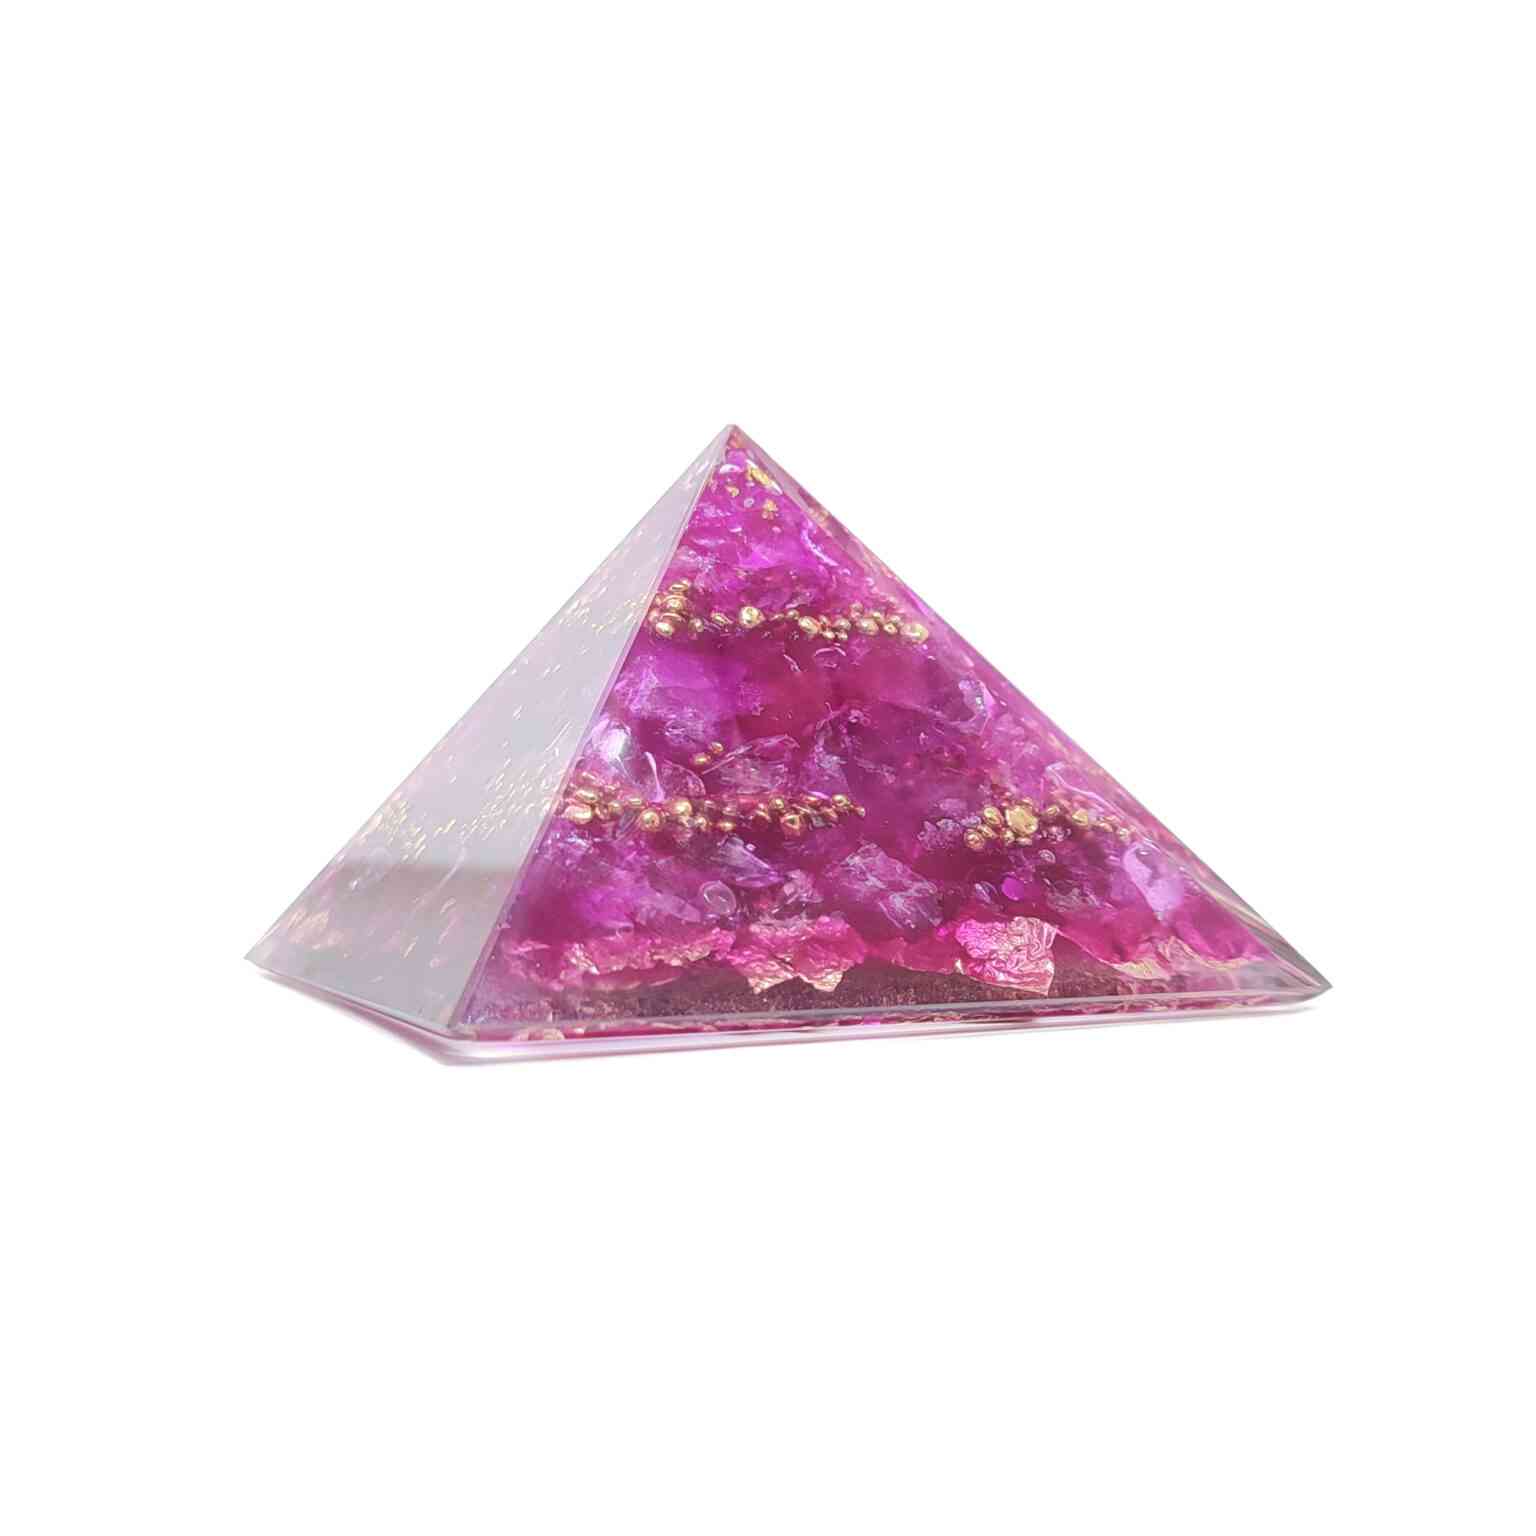 Pinke Orgonit Pyramide mit pinken Edelsteinen & goldenen Metallelementen.